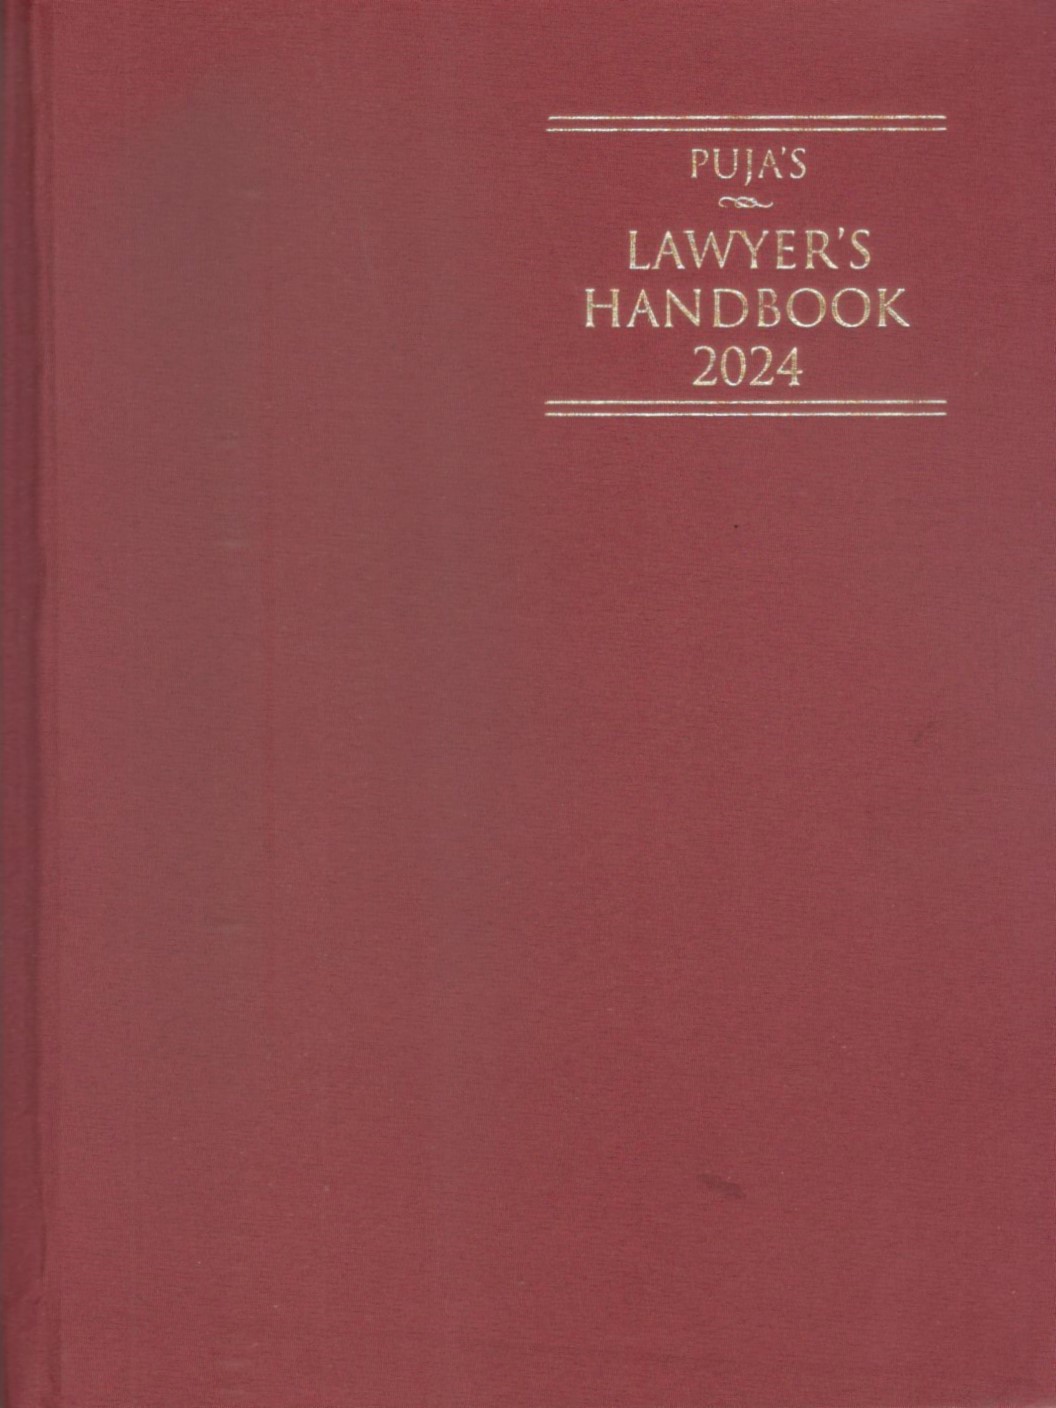  Buy Puja’s Lawyer’s Handbook 2024 - Maroon small Size Regular Hardbound